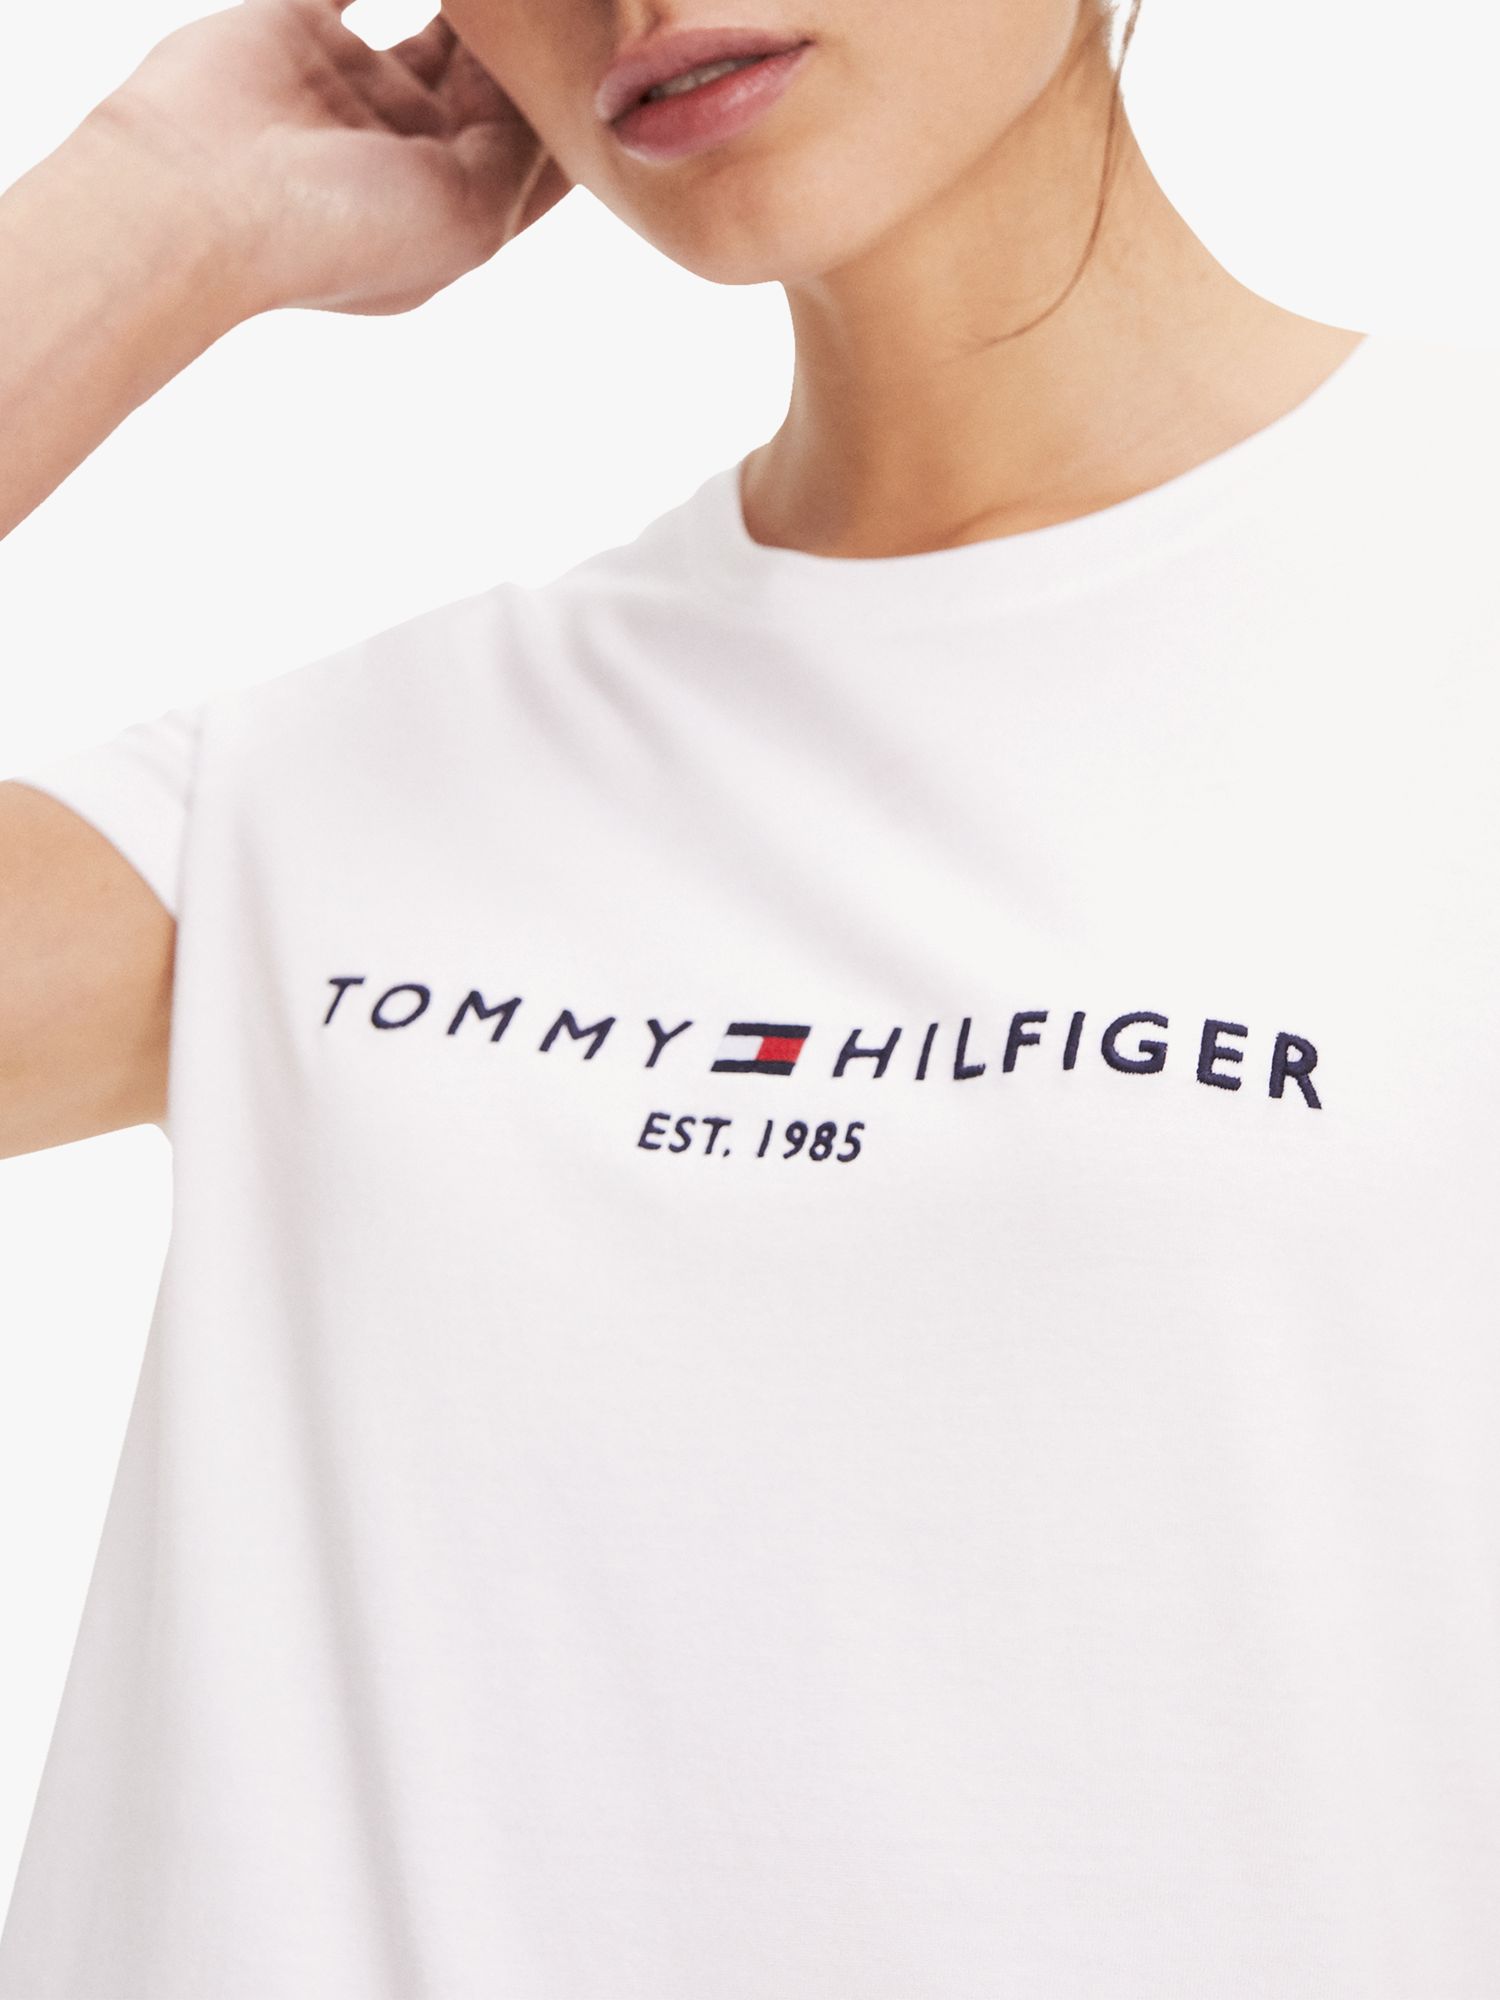 tommy hilfiger logo t shirt womens